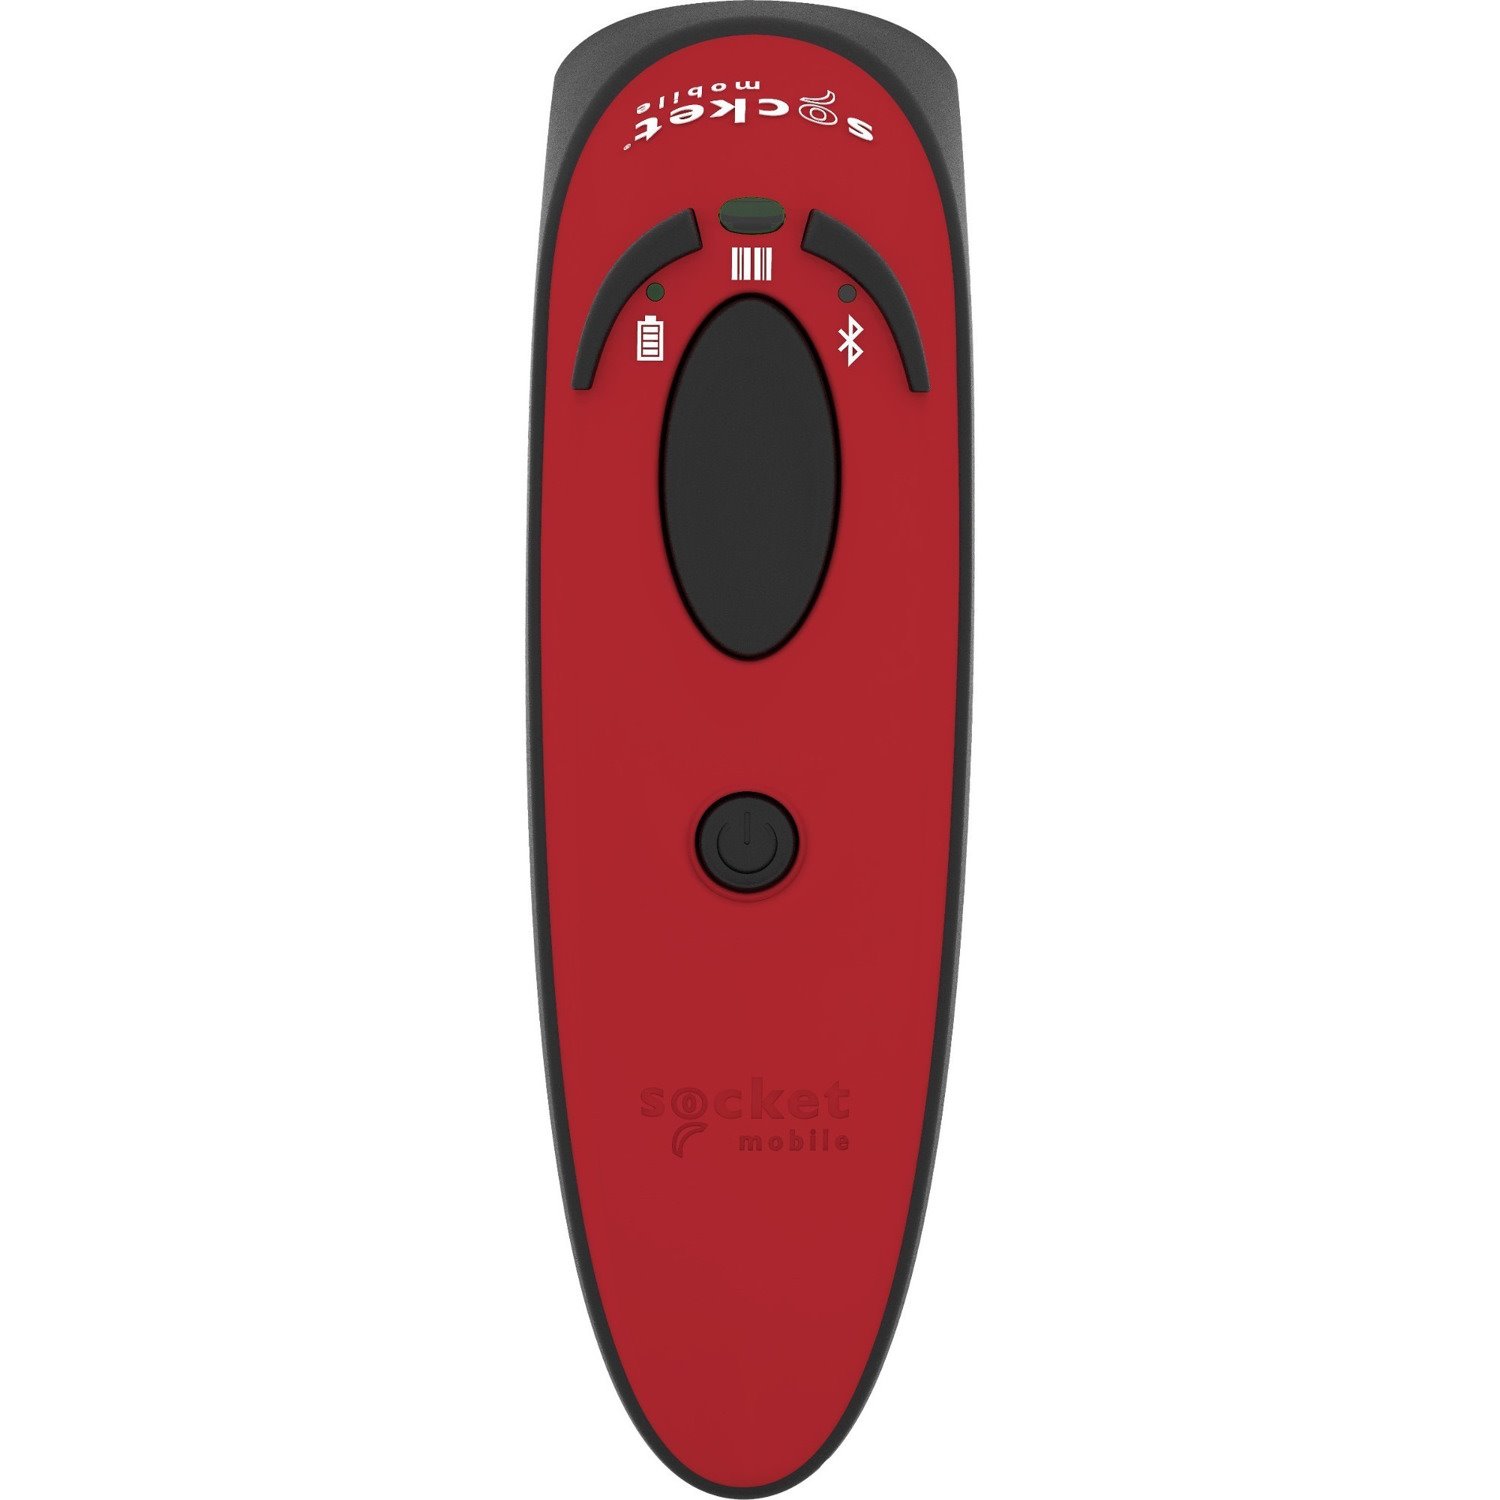 Socket Mobile DuraScan D730 Handheld Barcode Scanner - Wireless Connectivity - Red